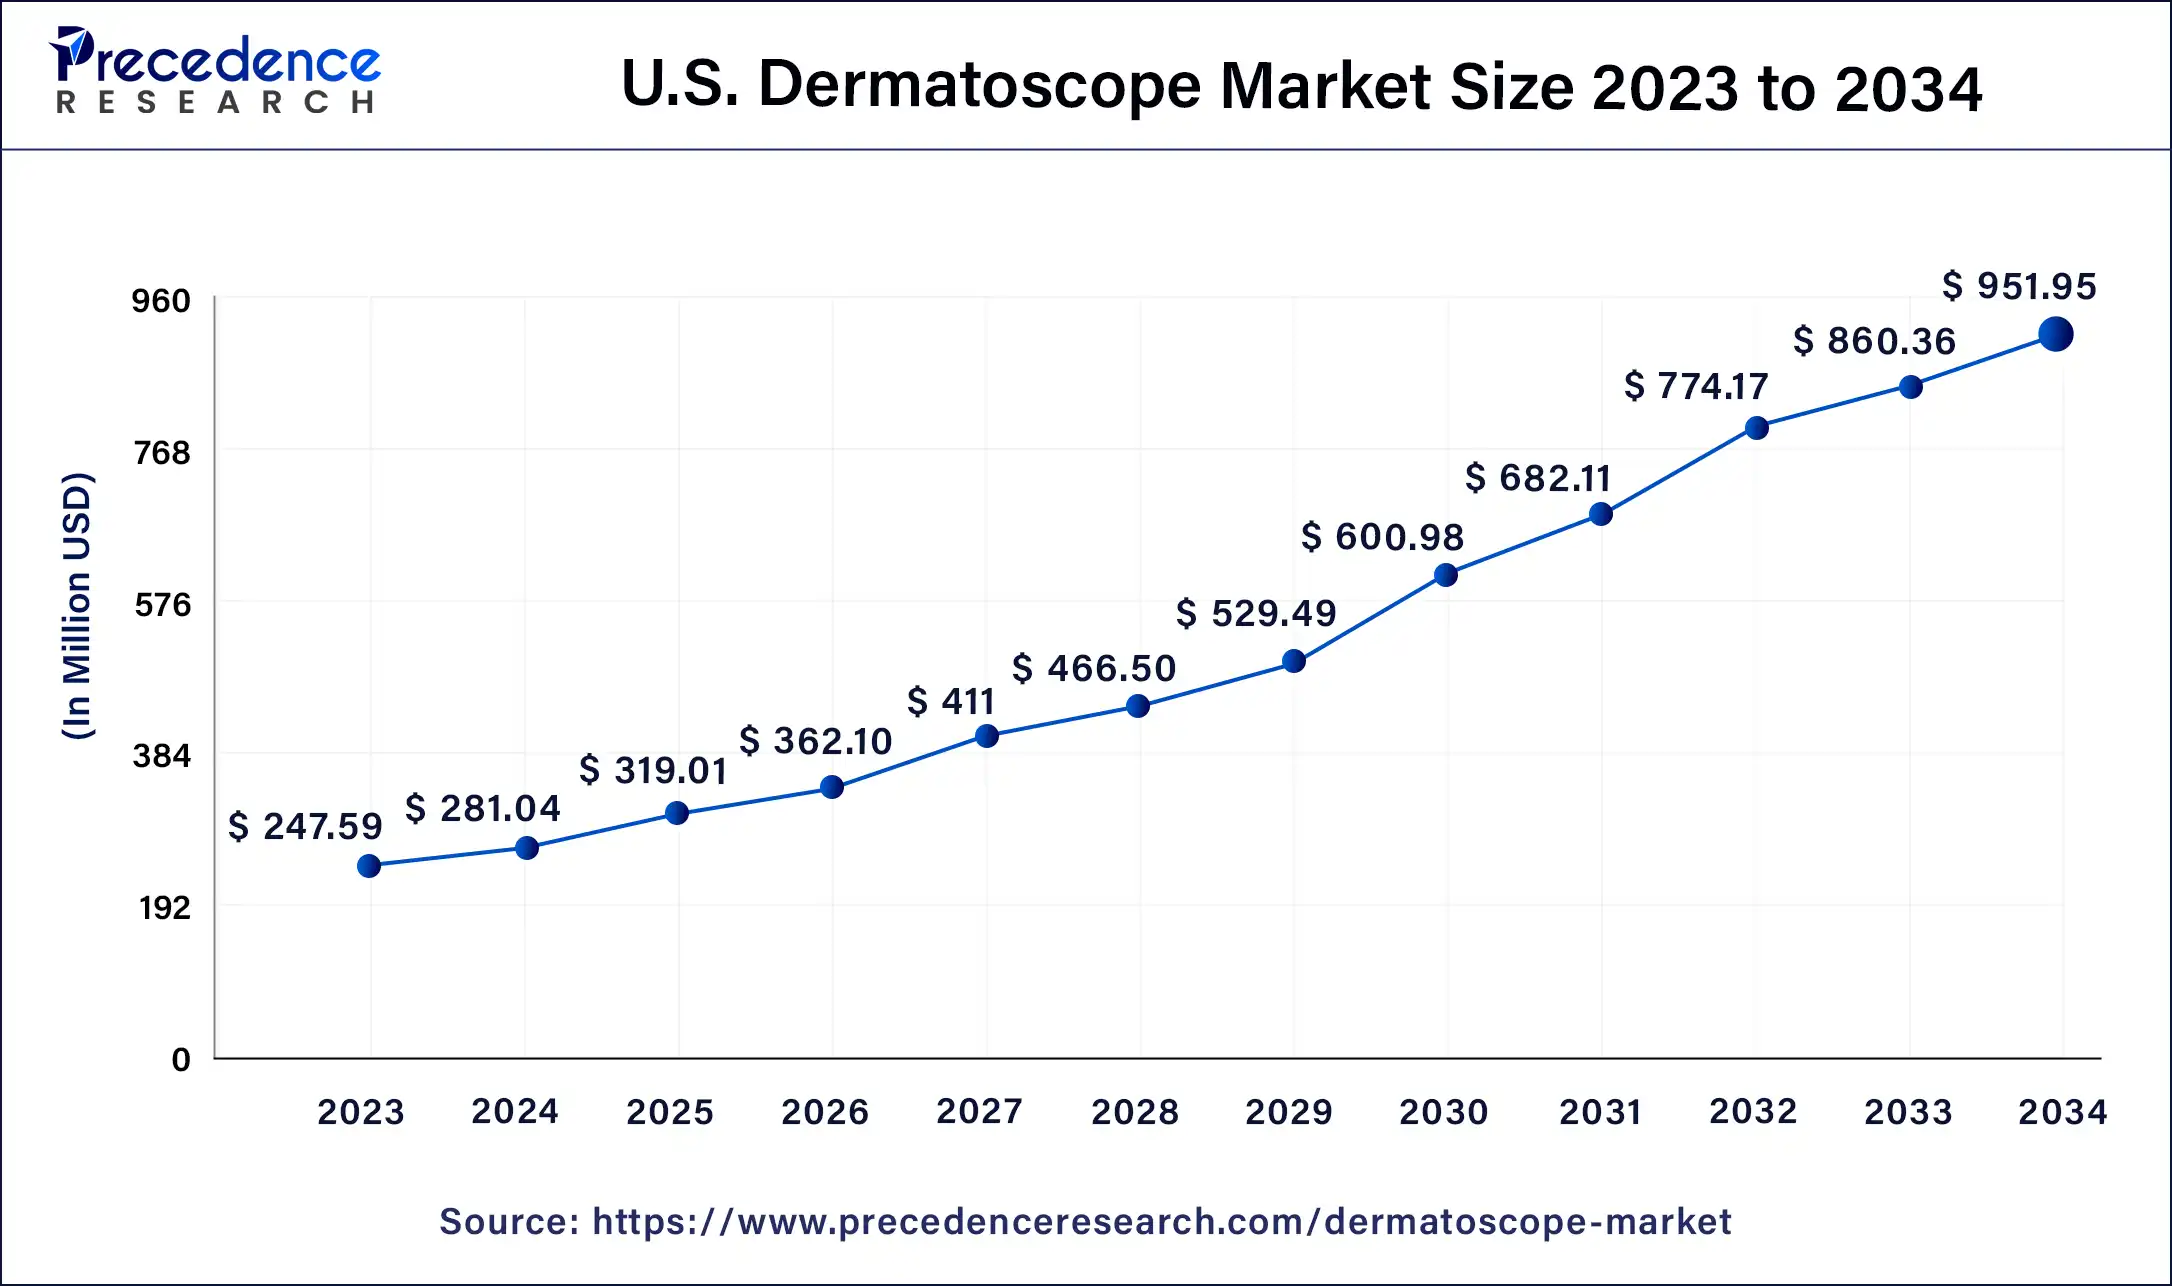 U.S. Dermatoscope Market Size 2024 to 2034